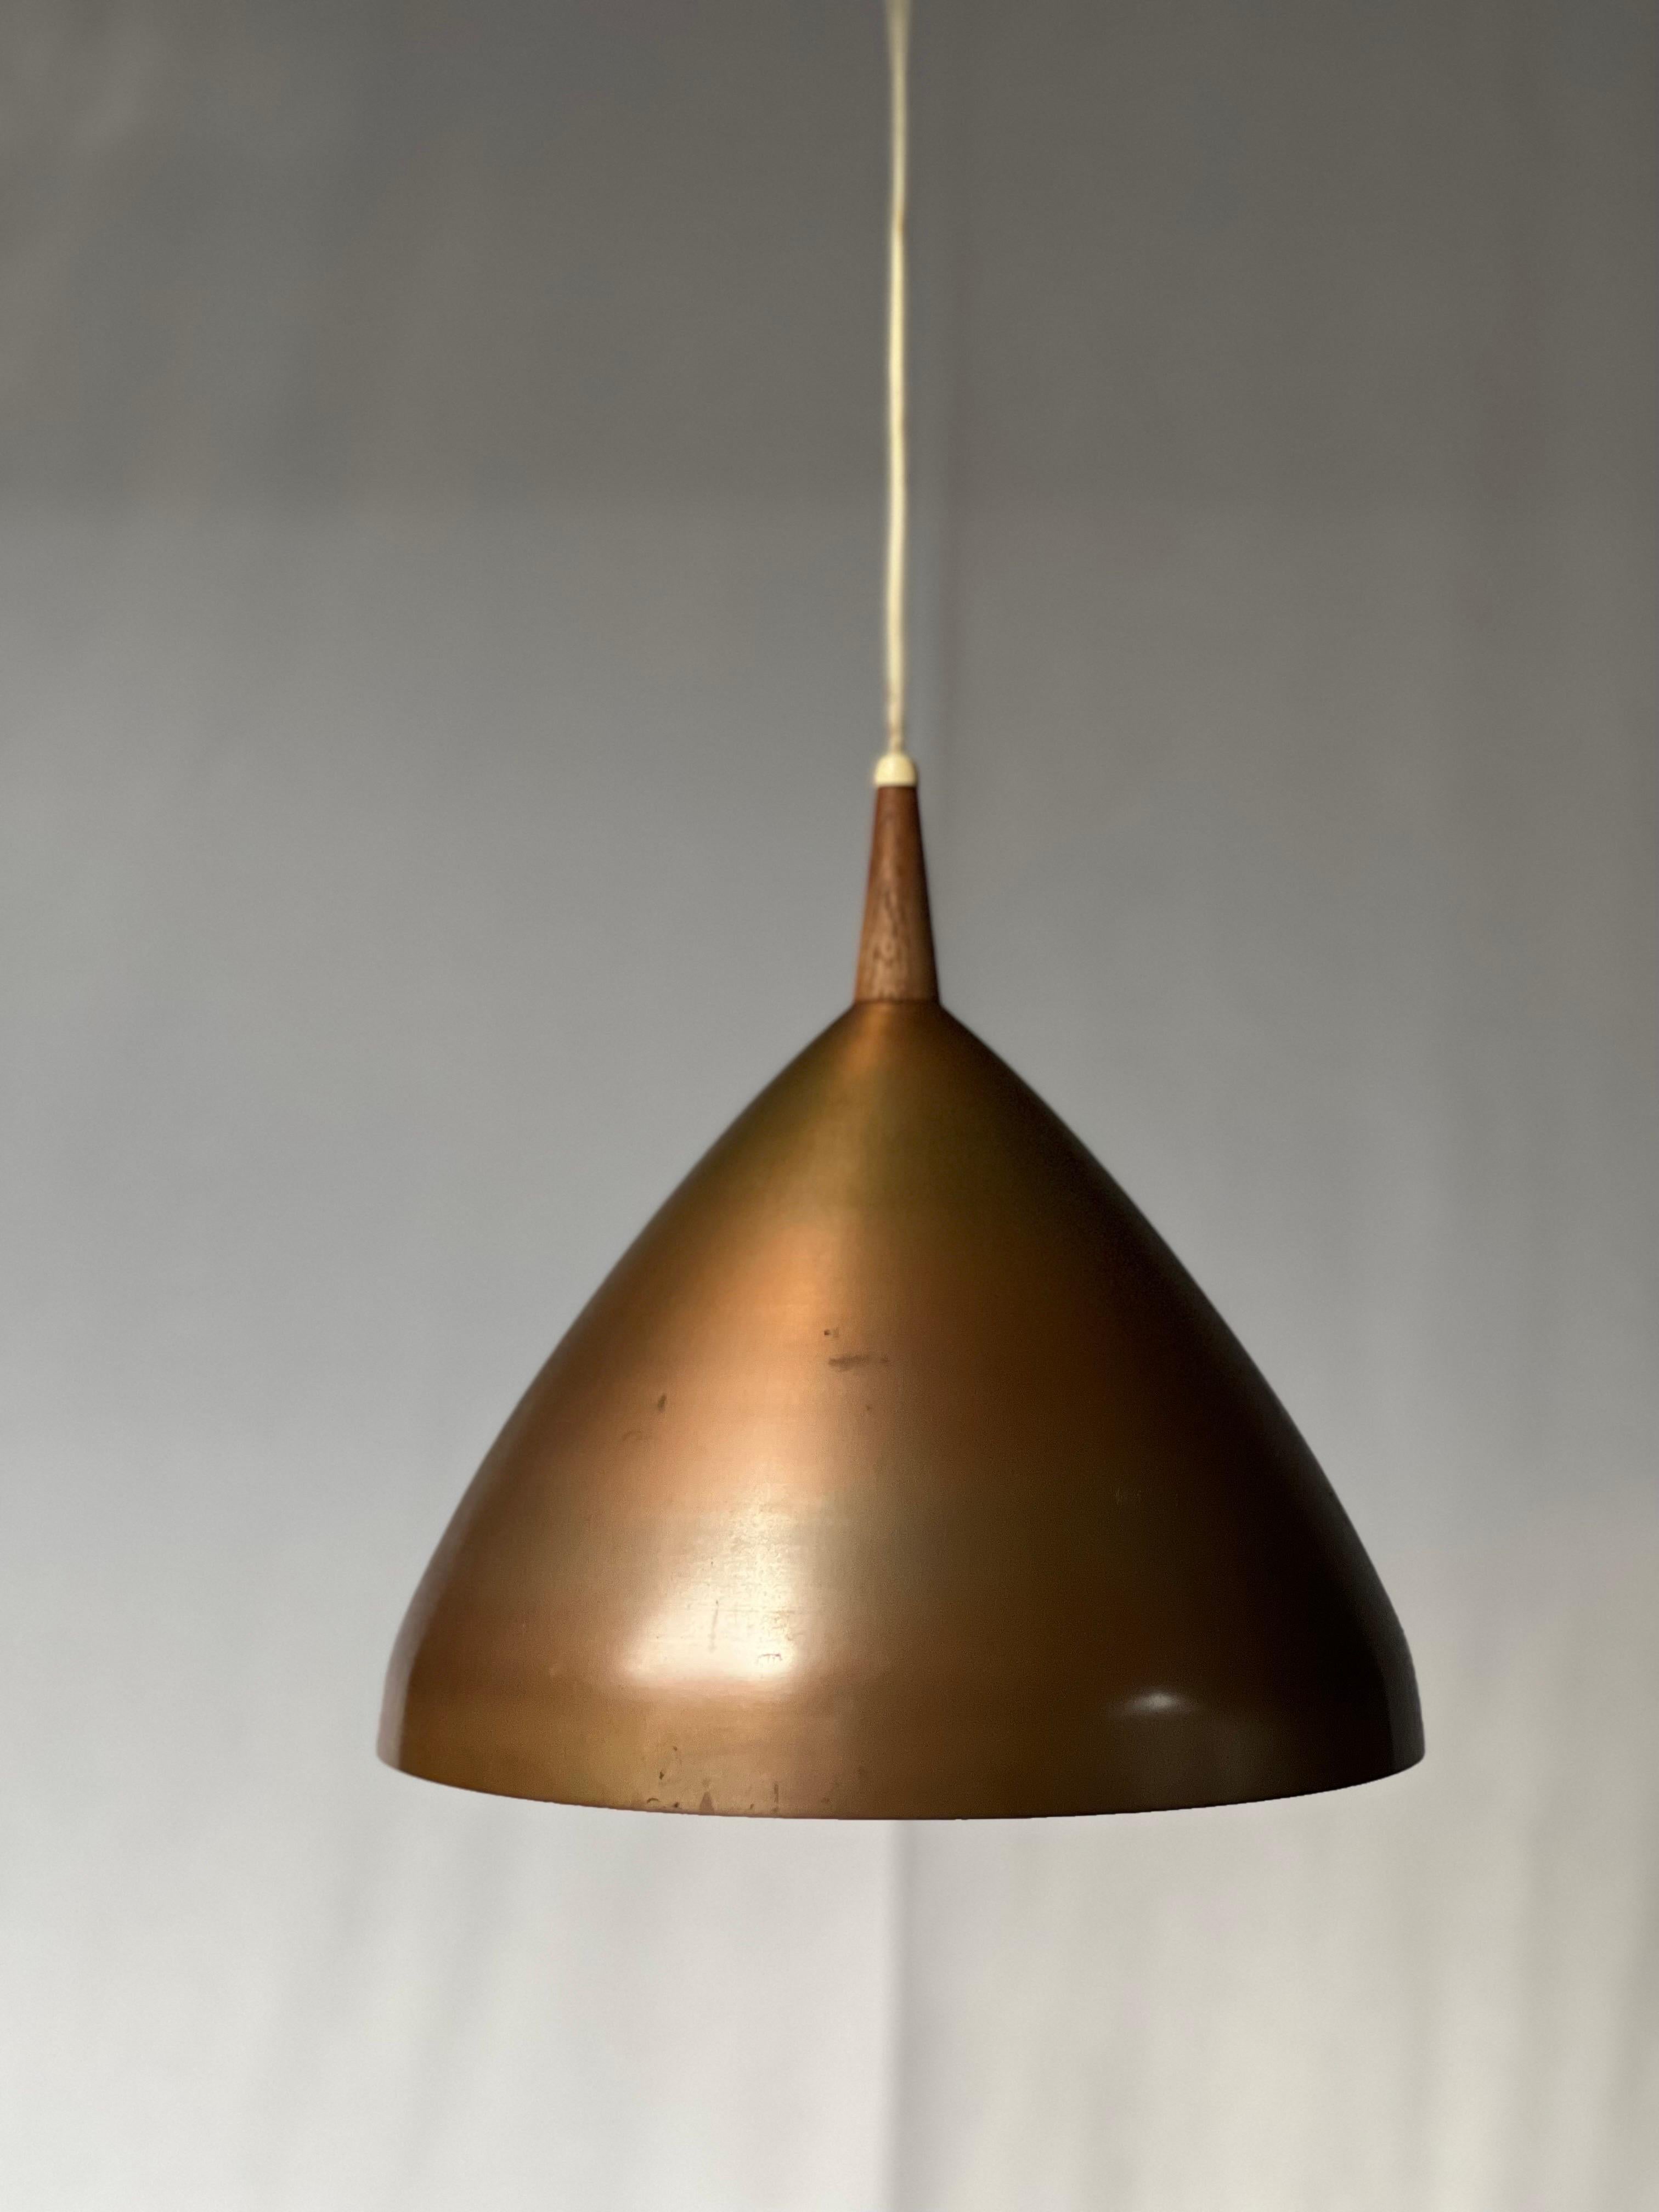 Metal Hans Agne Jakobsson Copper suspension Lamp, Midcentury from Sweden 1950's For Sale